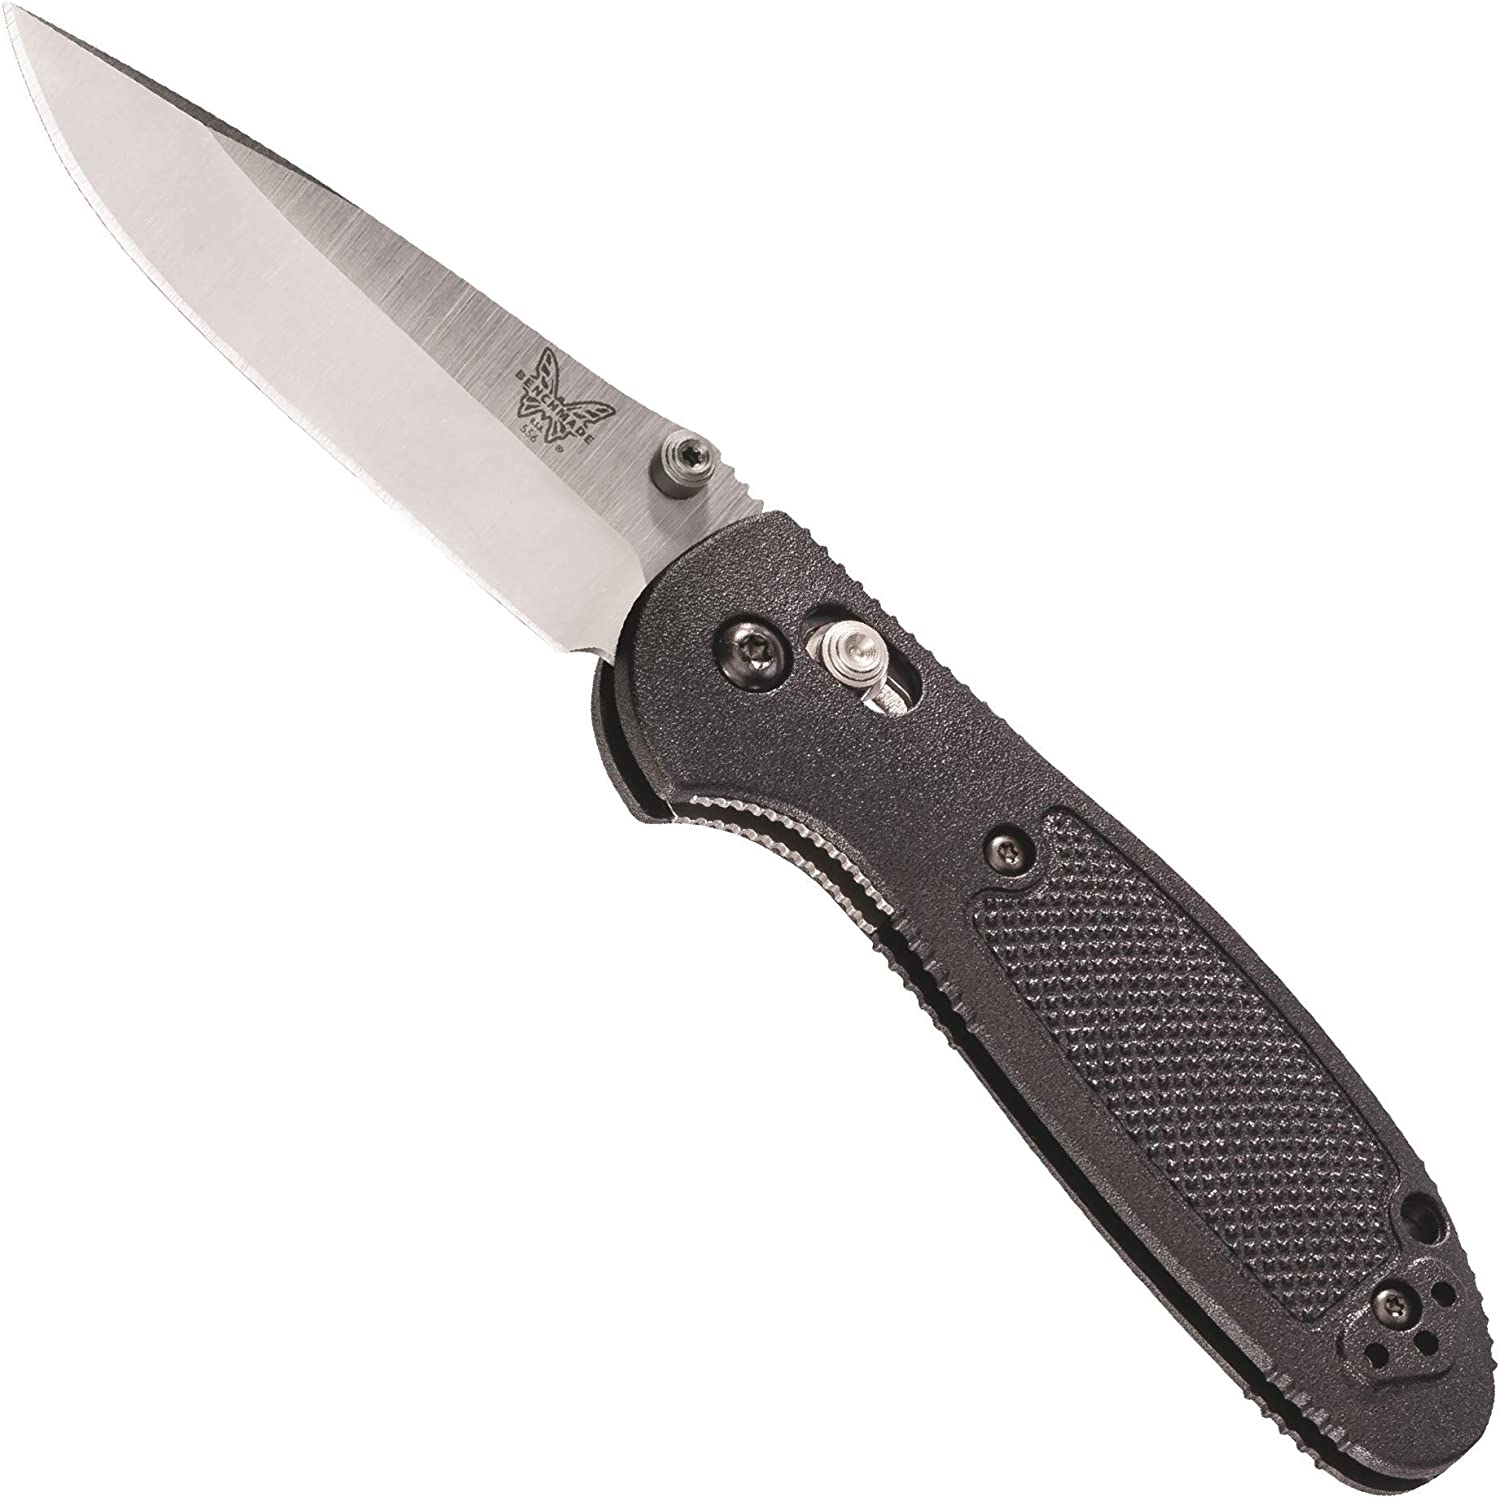 Benchmade – Mini Griptilian 556 EDC Manual Open Folding Knife Made in USA with CPM-S30V Steel, Drop-Point Blade, Plain Edge, Satin Finish, Black Handle (BKC556-S30V)